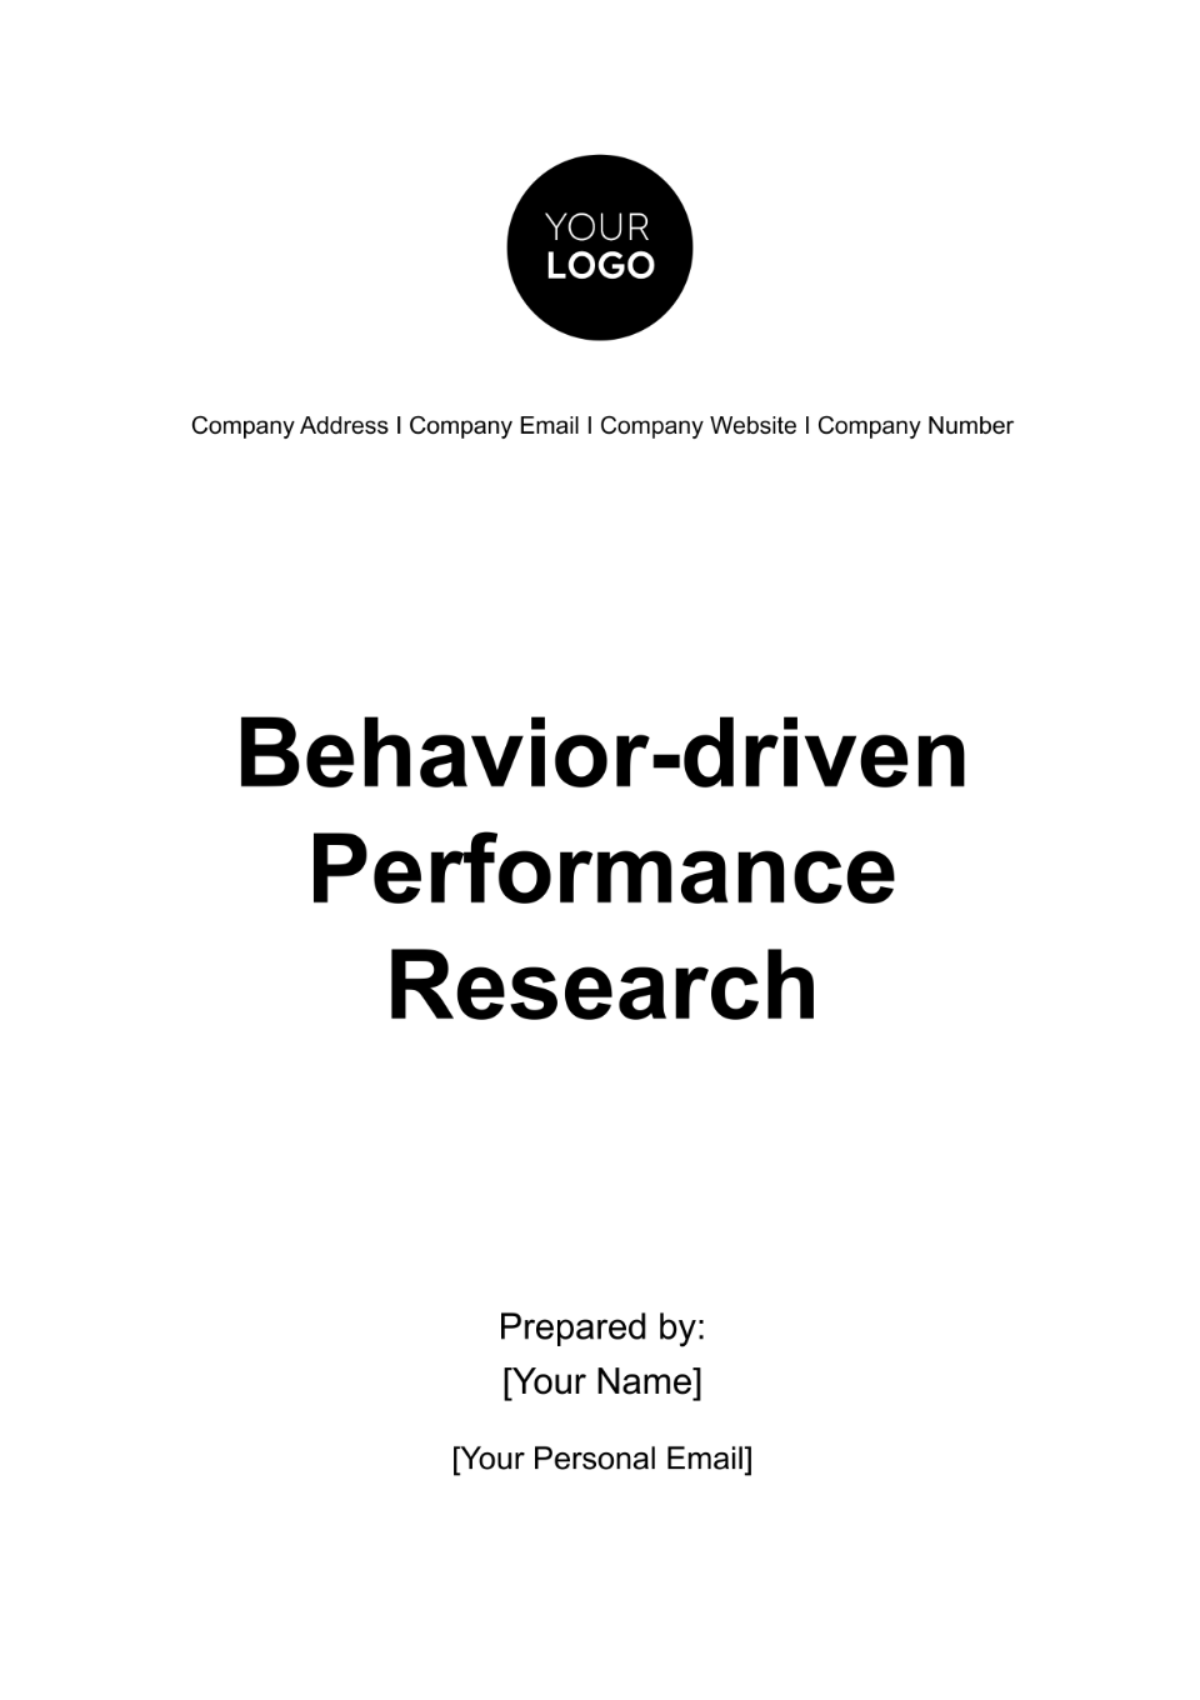 Behavior-driven Performance Research HR Template